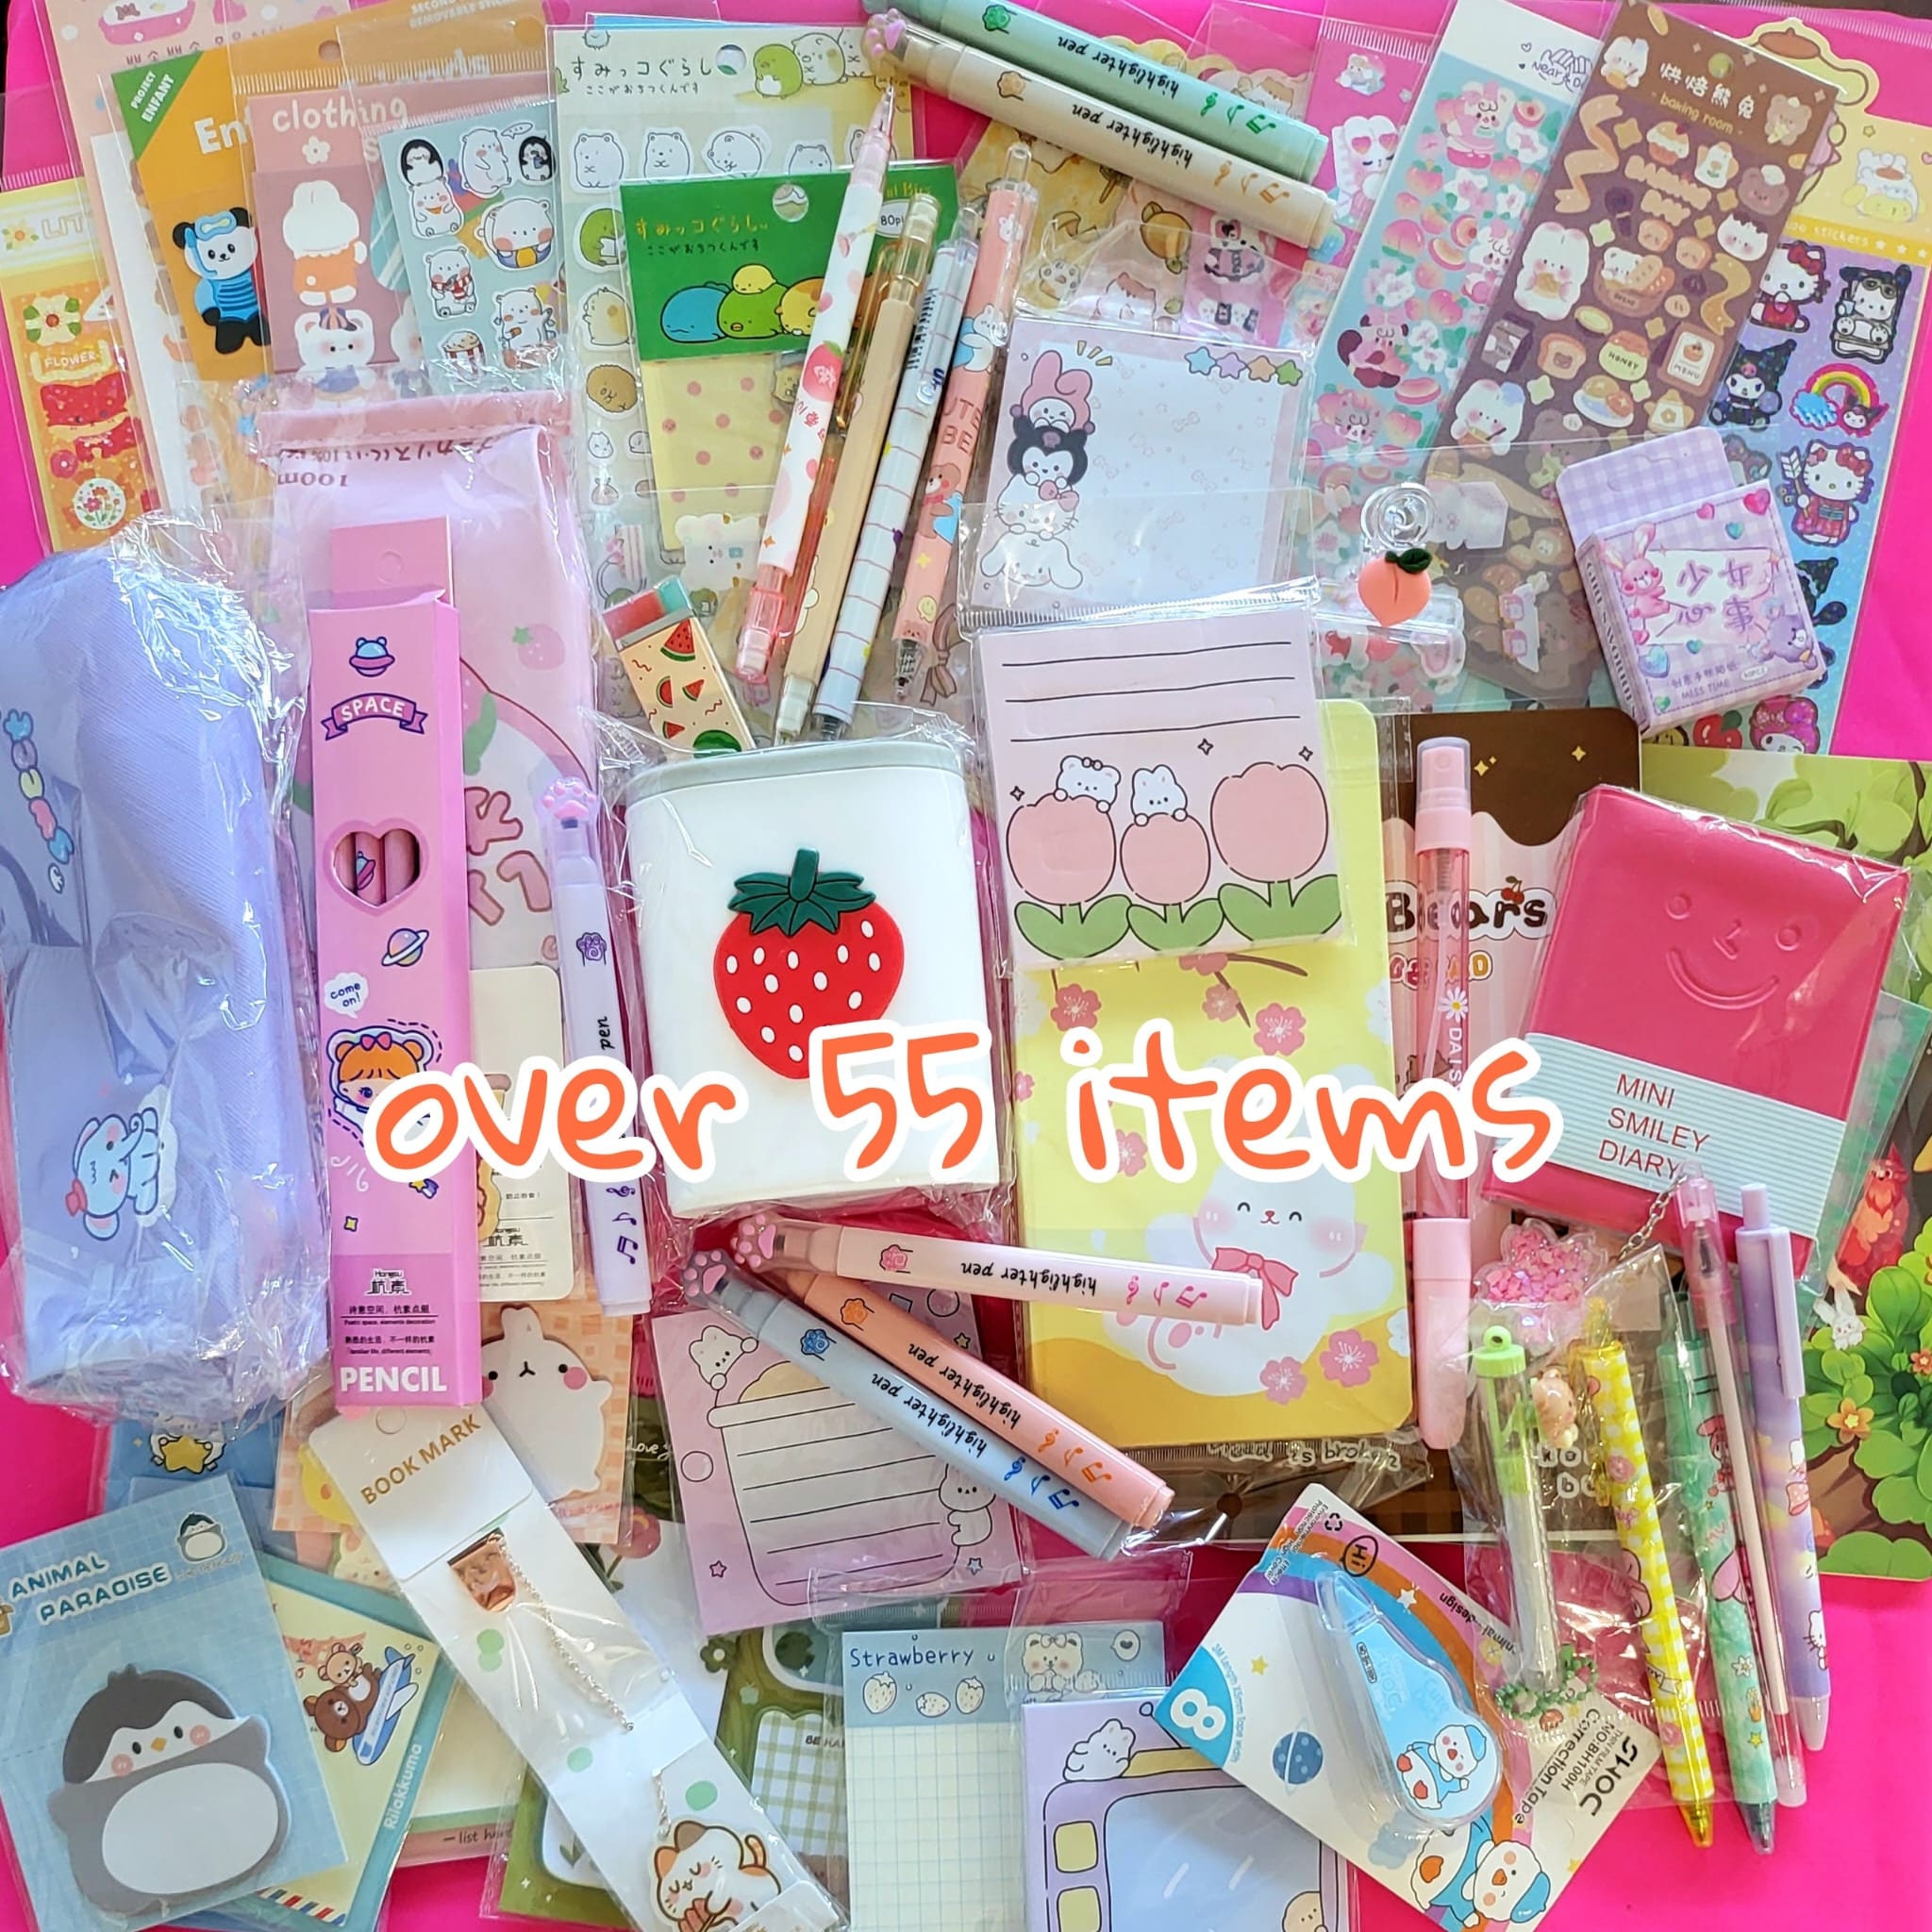 Kawaii Cute Molang Stationery School Office Supplies Gift Box Mystery Grab  Bag Japanese Korean Style for Kids Students Birthdays Holidays -  Hong  Kong